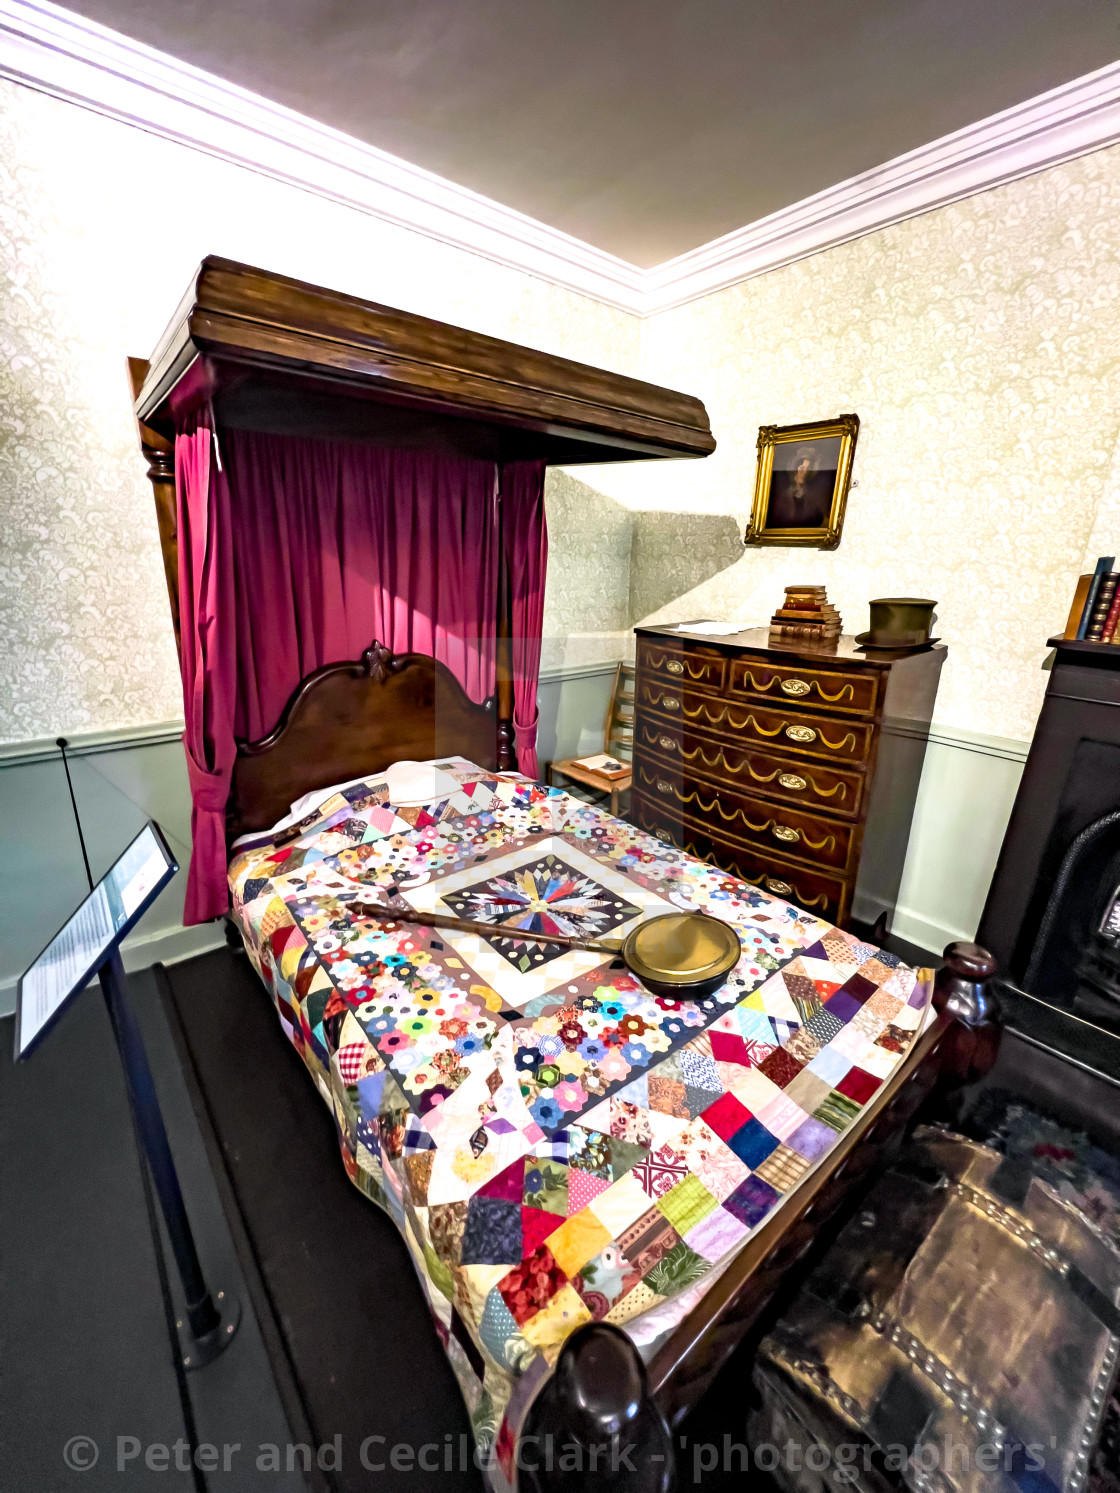 "Bronte Parsonage Bedroom, Haworth" stock image